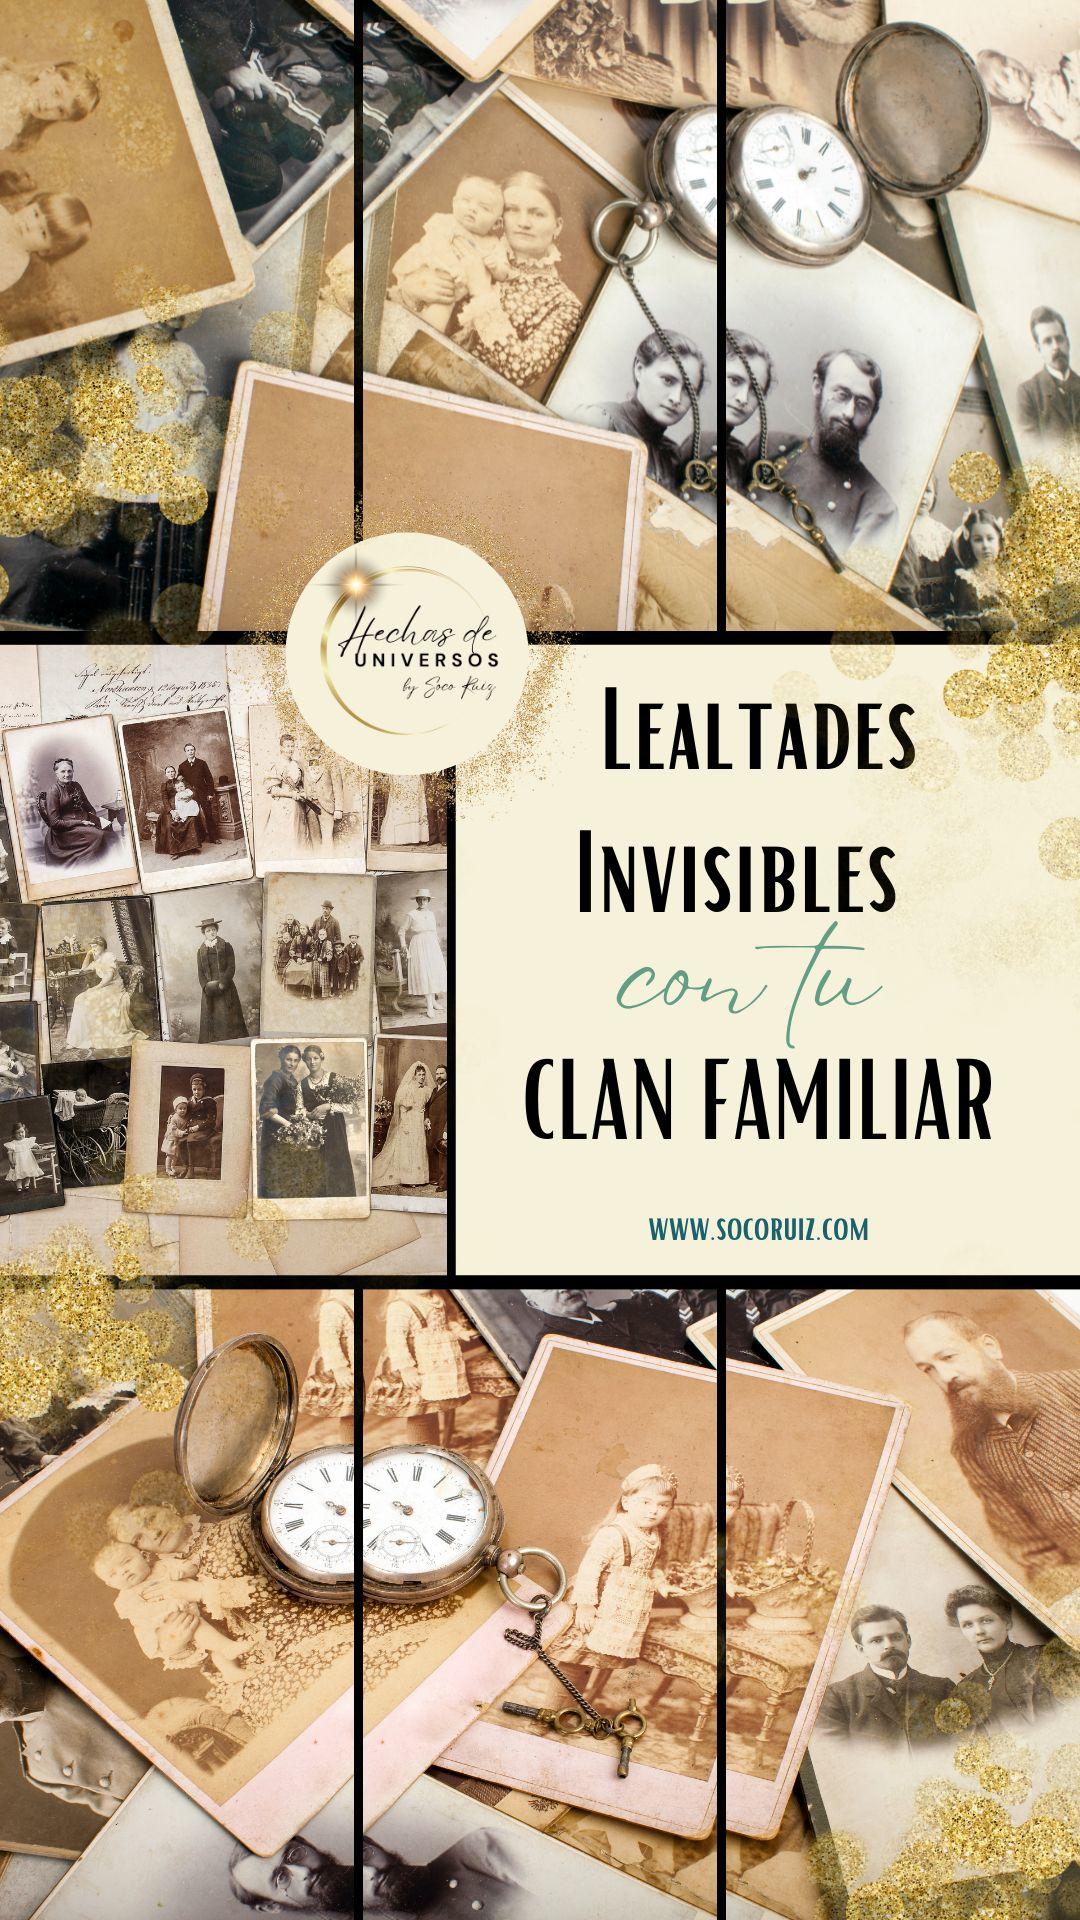 Lealtades-invisibles-con-tu-clan-familiar.jpg